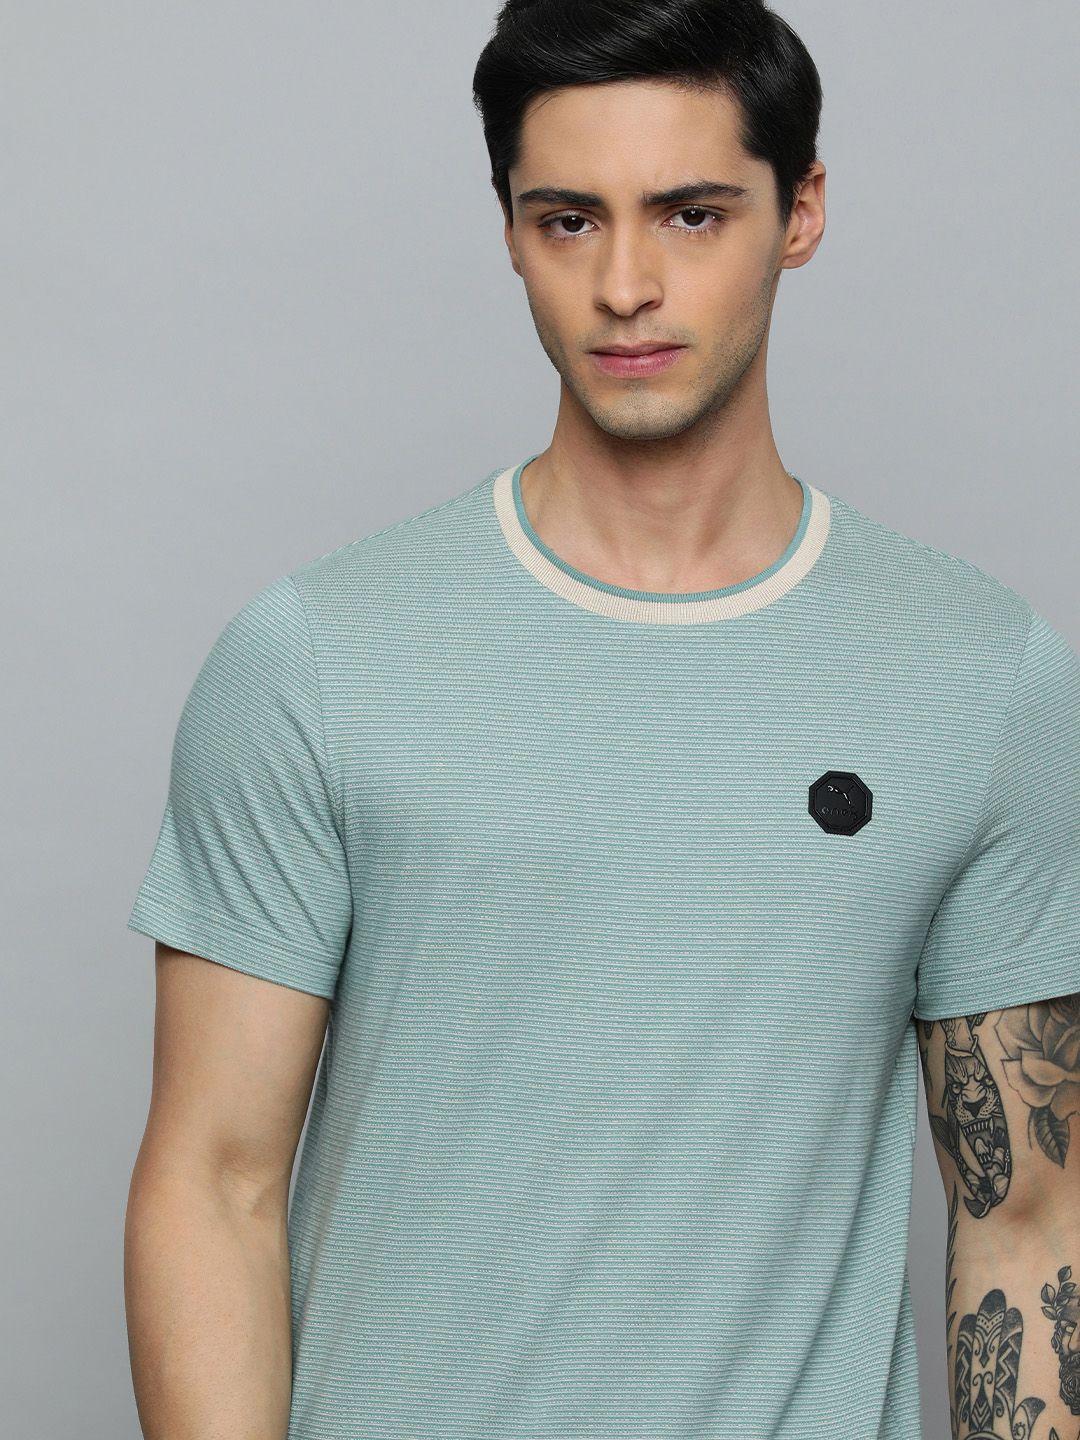 one8 x puma virat kohli jacquard pure cotton slim fit ribbed outdoor t-shirt